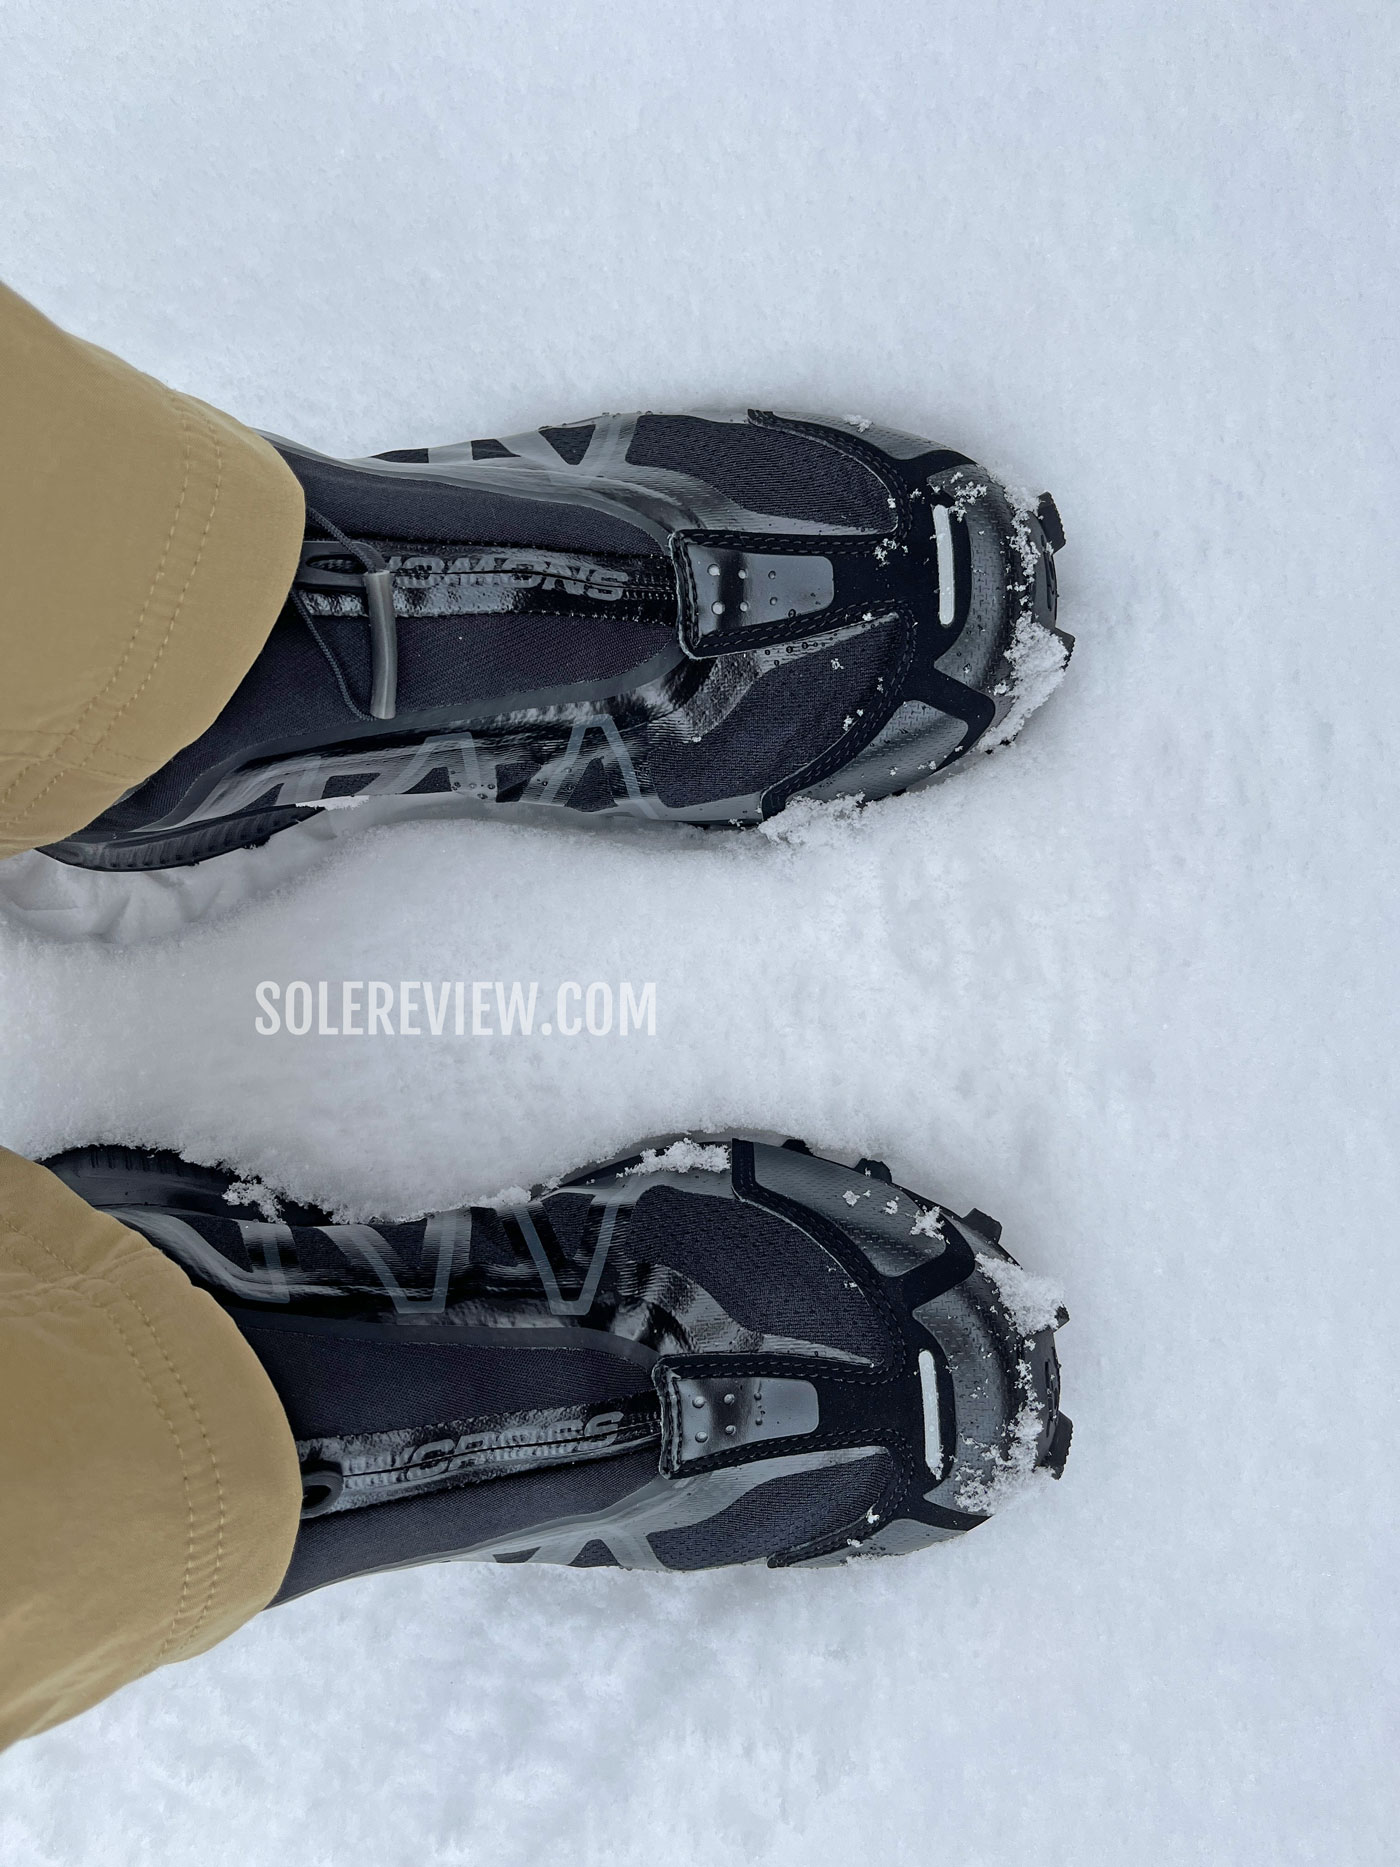 The Salomon Snowcross in snow.